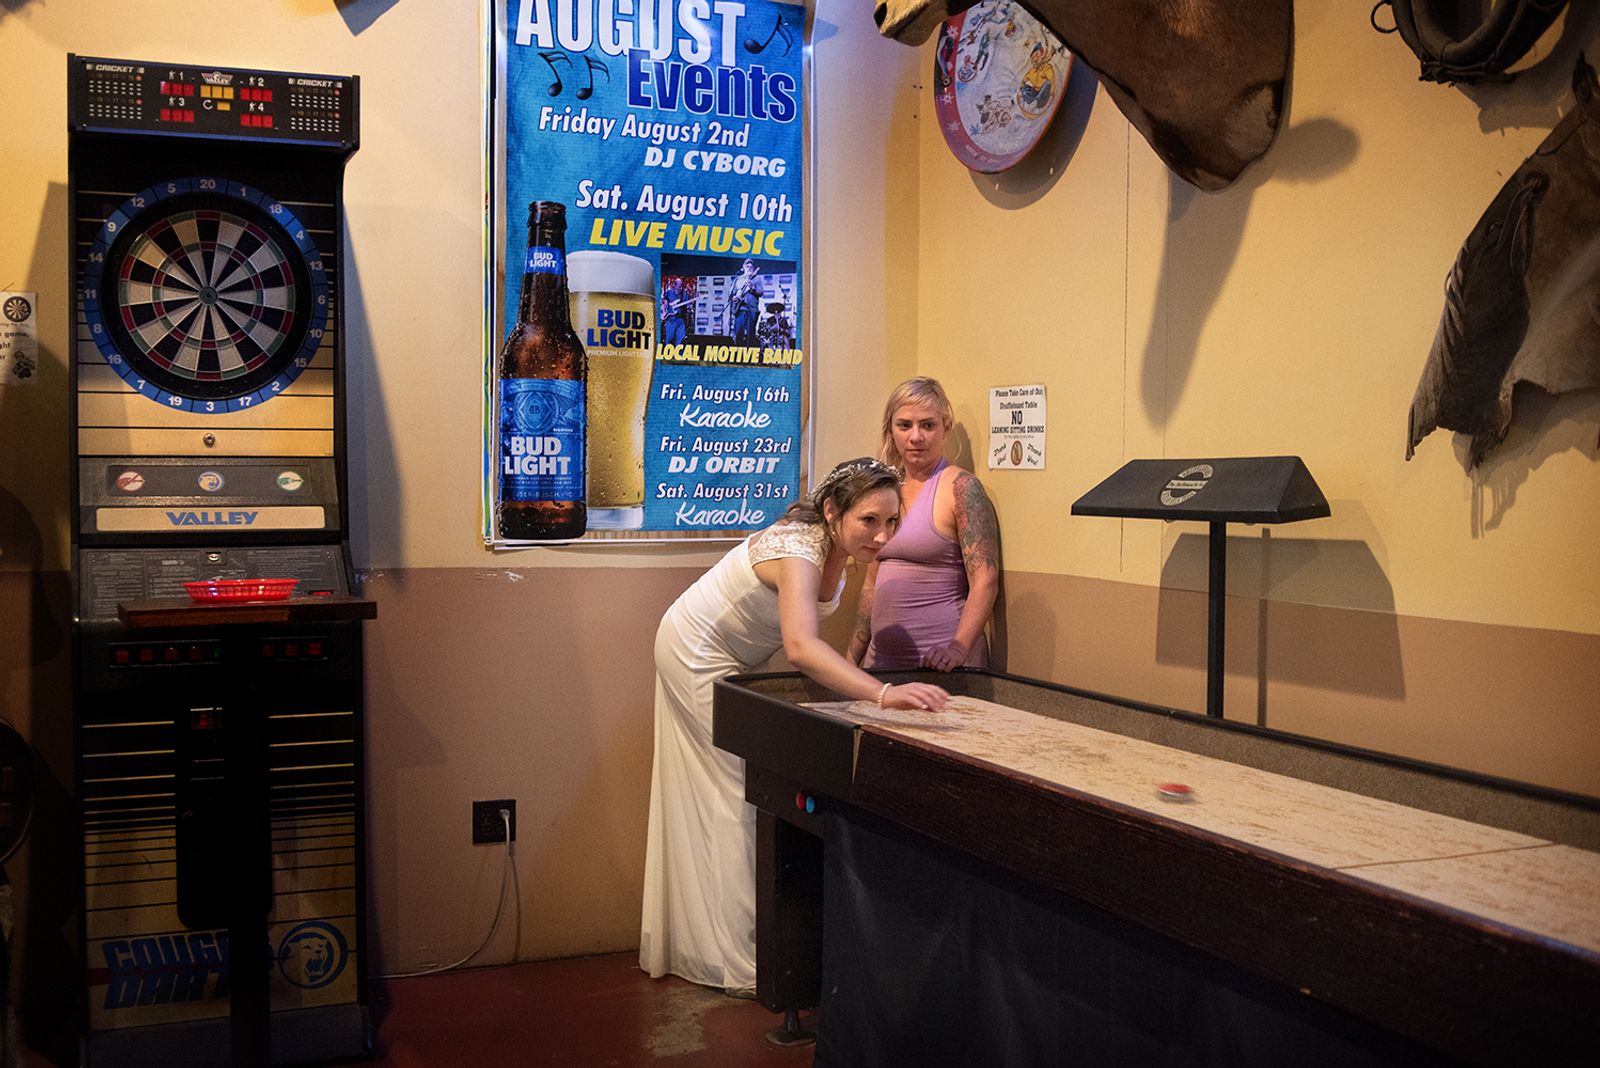 © Daria Addabbo - Wedding celebrations in a bar. Bishop, California. August 2019